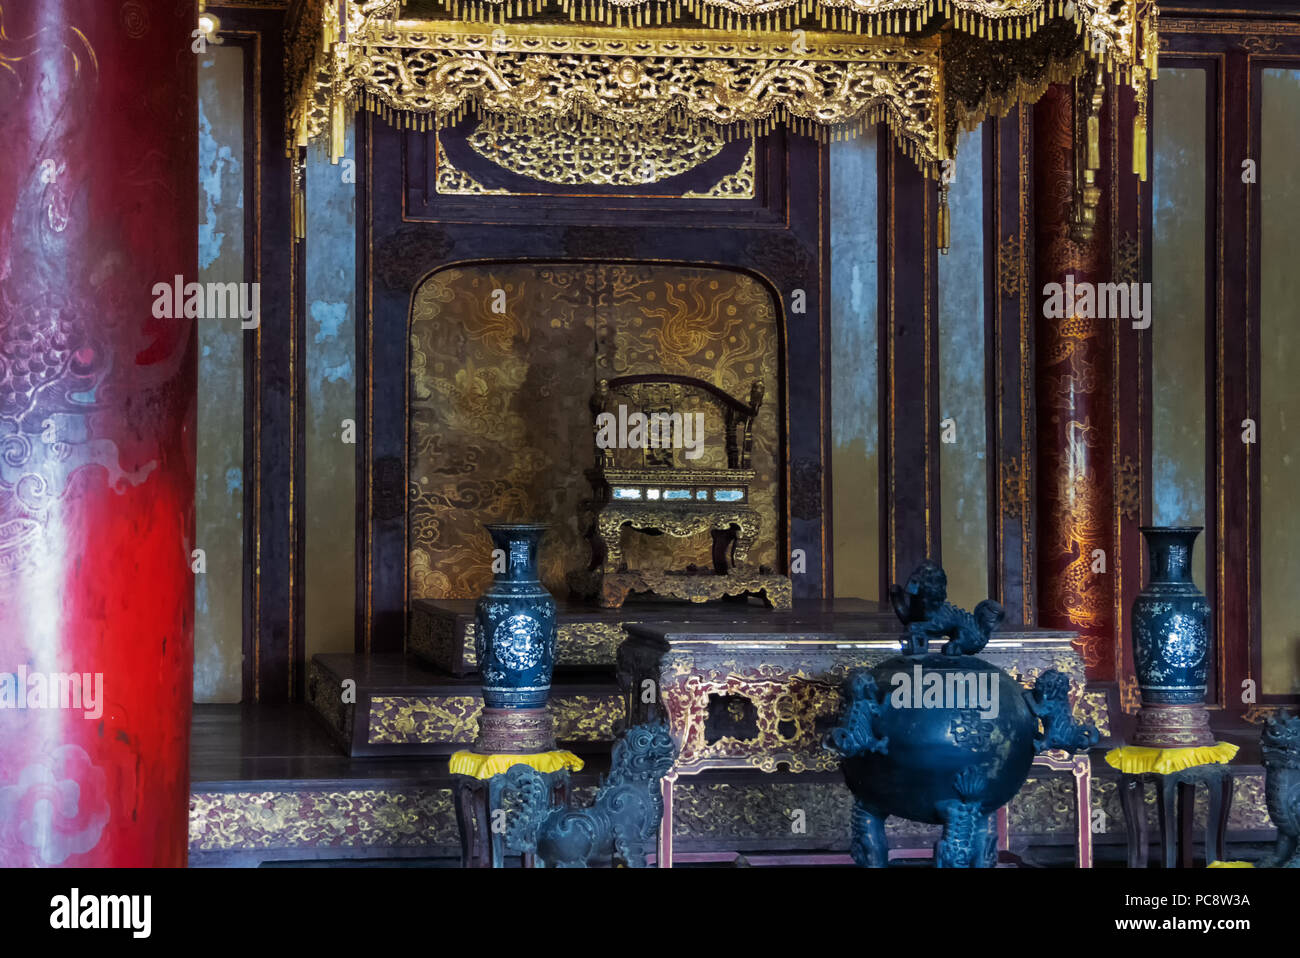 Emperor's throne, Thai Hoa Palace interior, Imperial Palace, Hue, Viet Nam Stock Photo